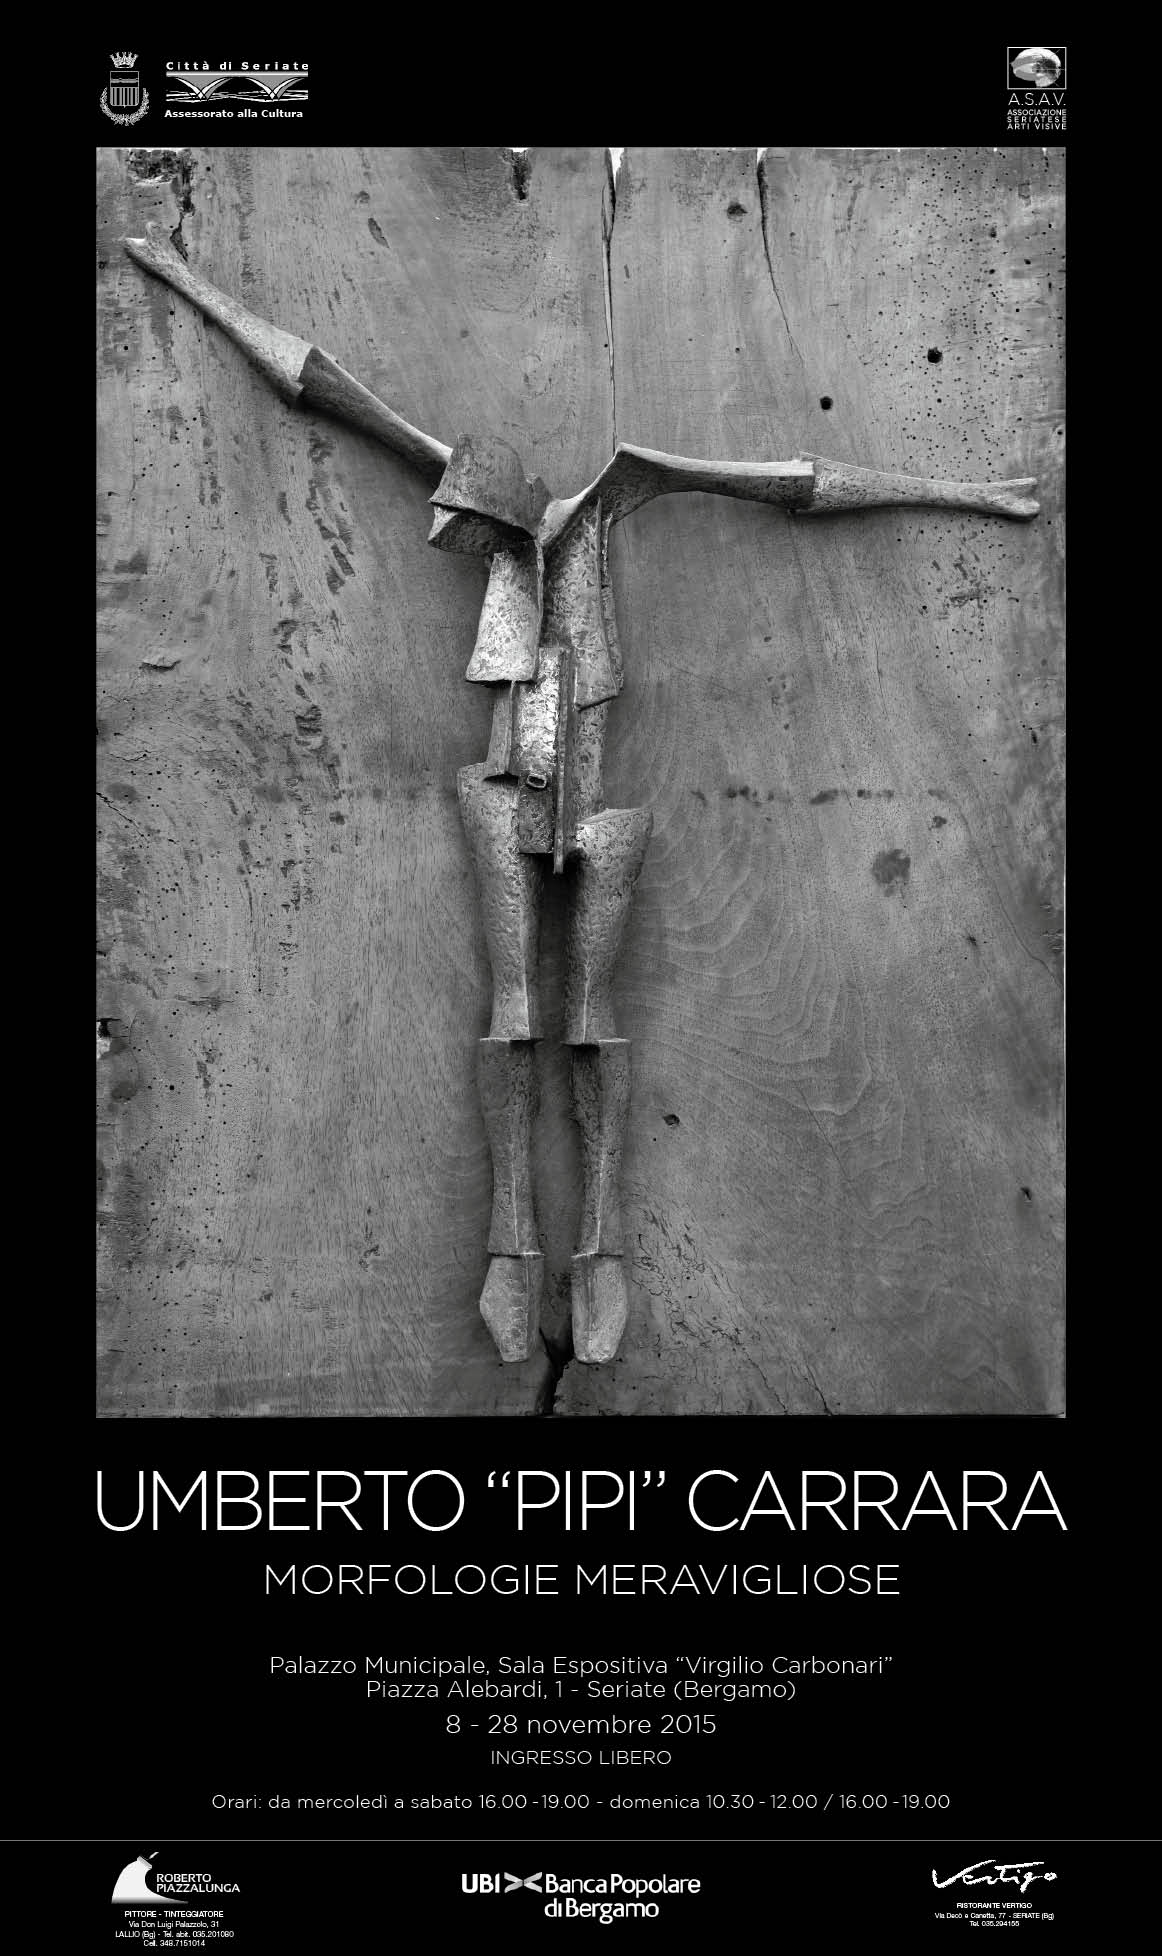 Umberto Pipi Carrara - Morfologie meravigliose